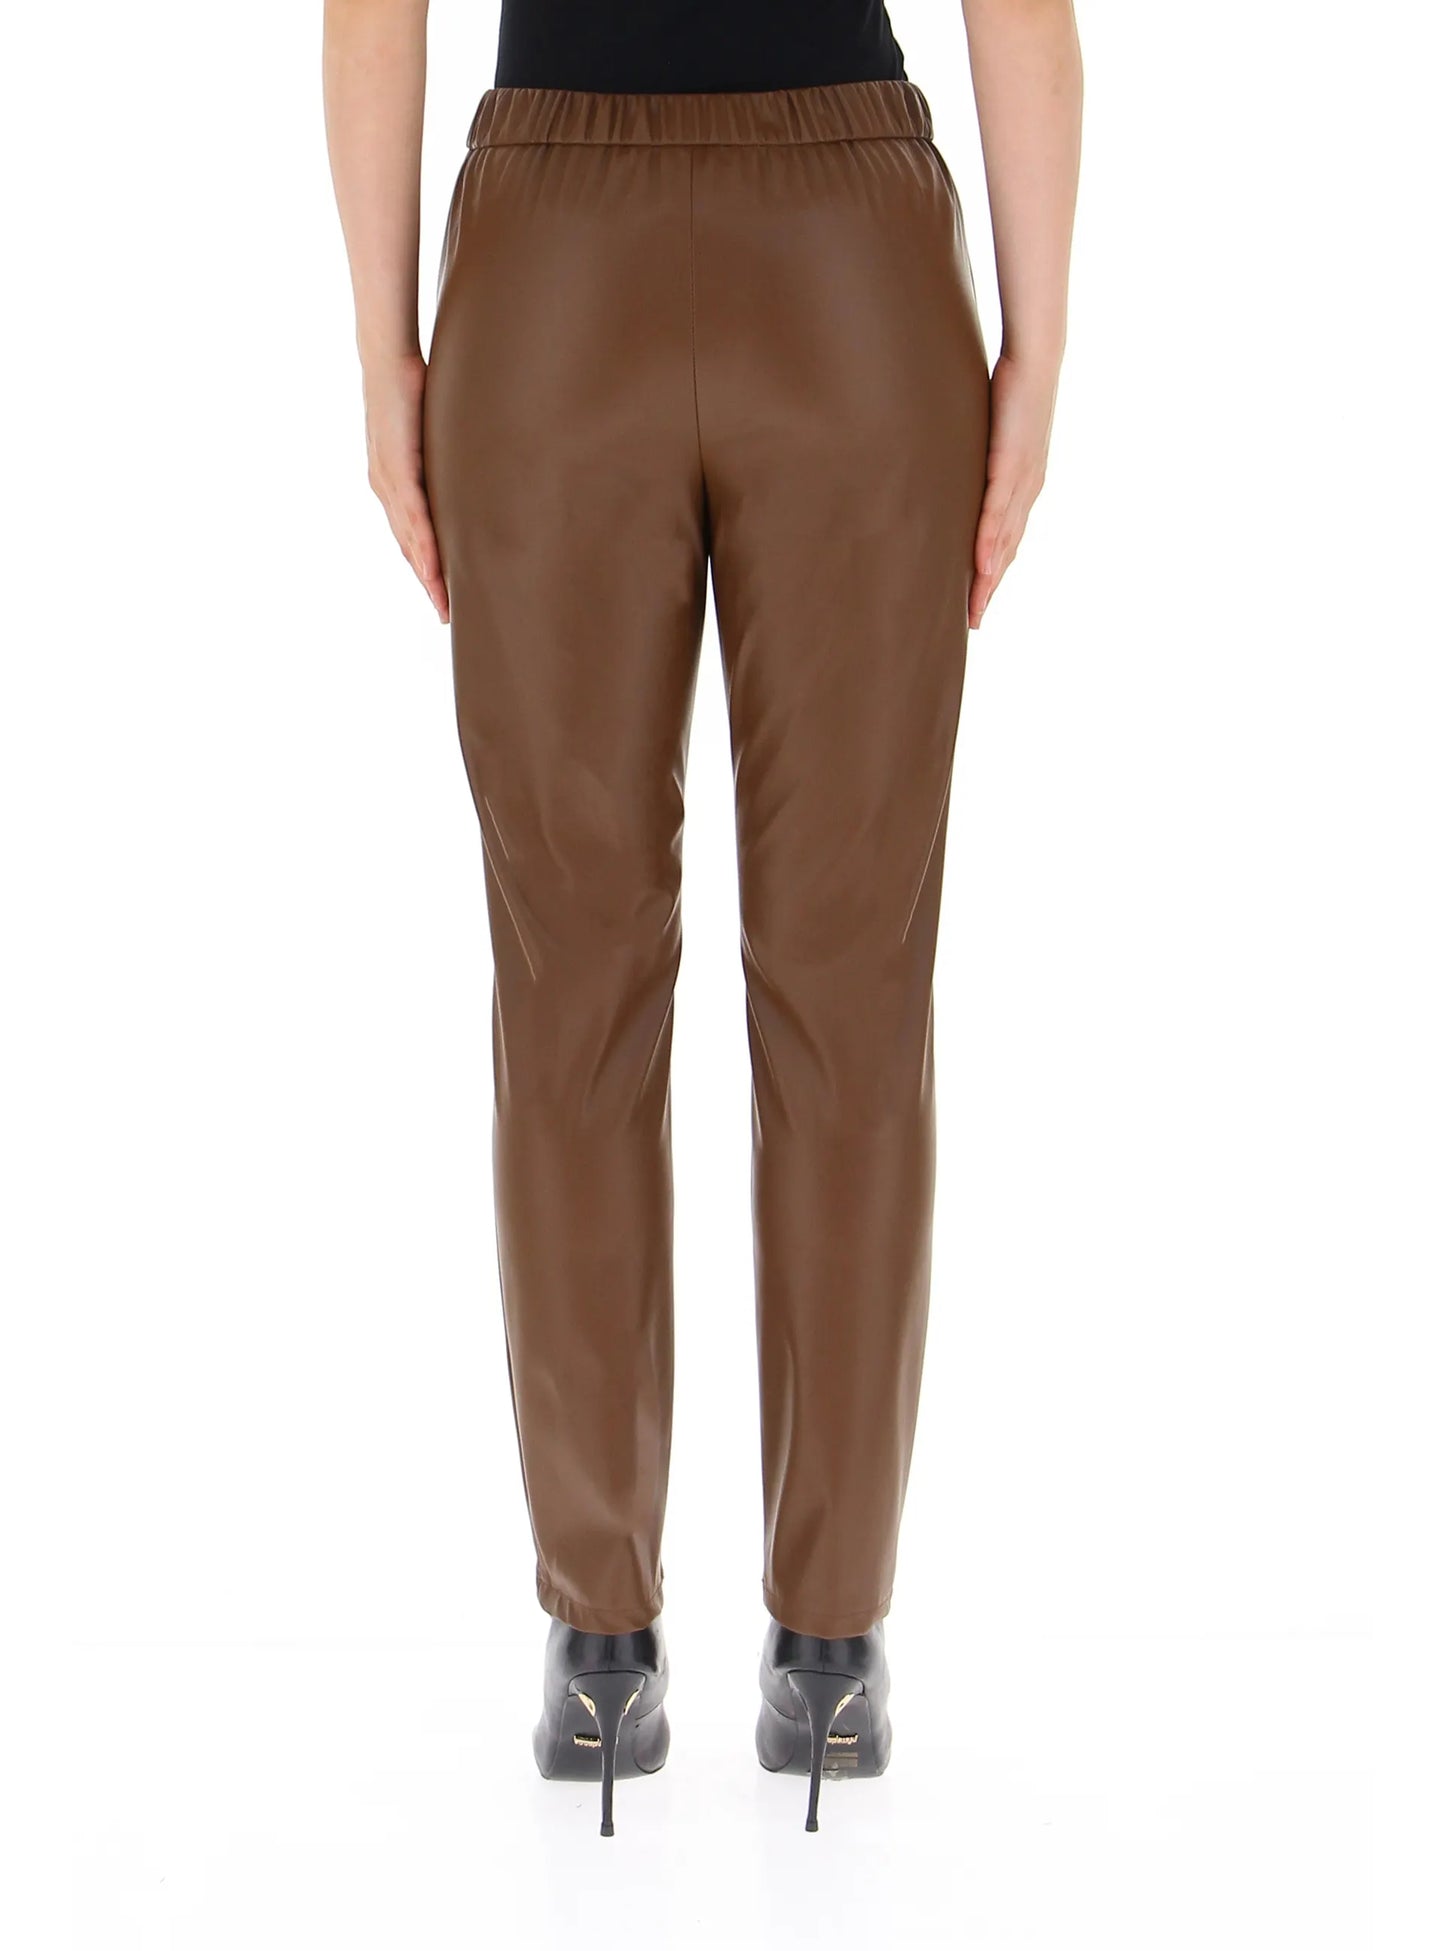 Pantalone in ecopelle marrone retro